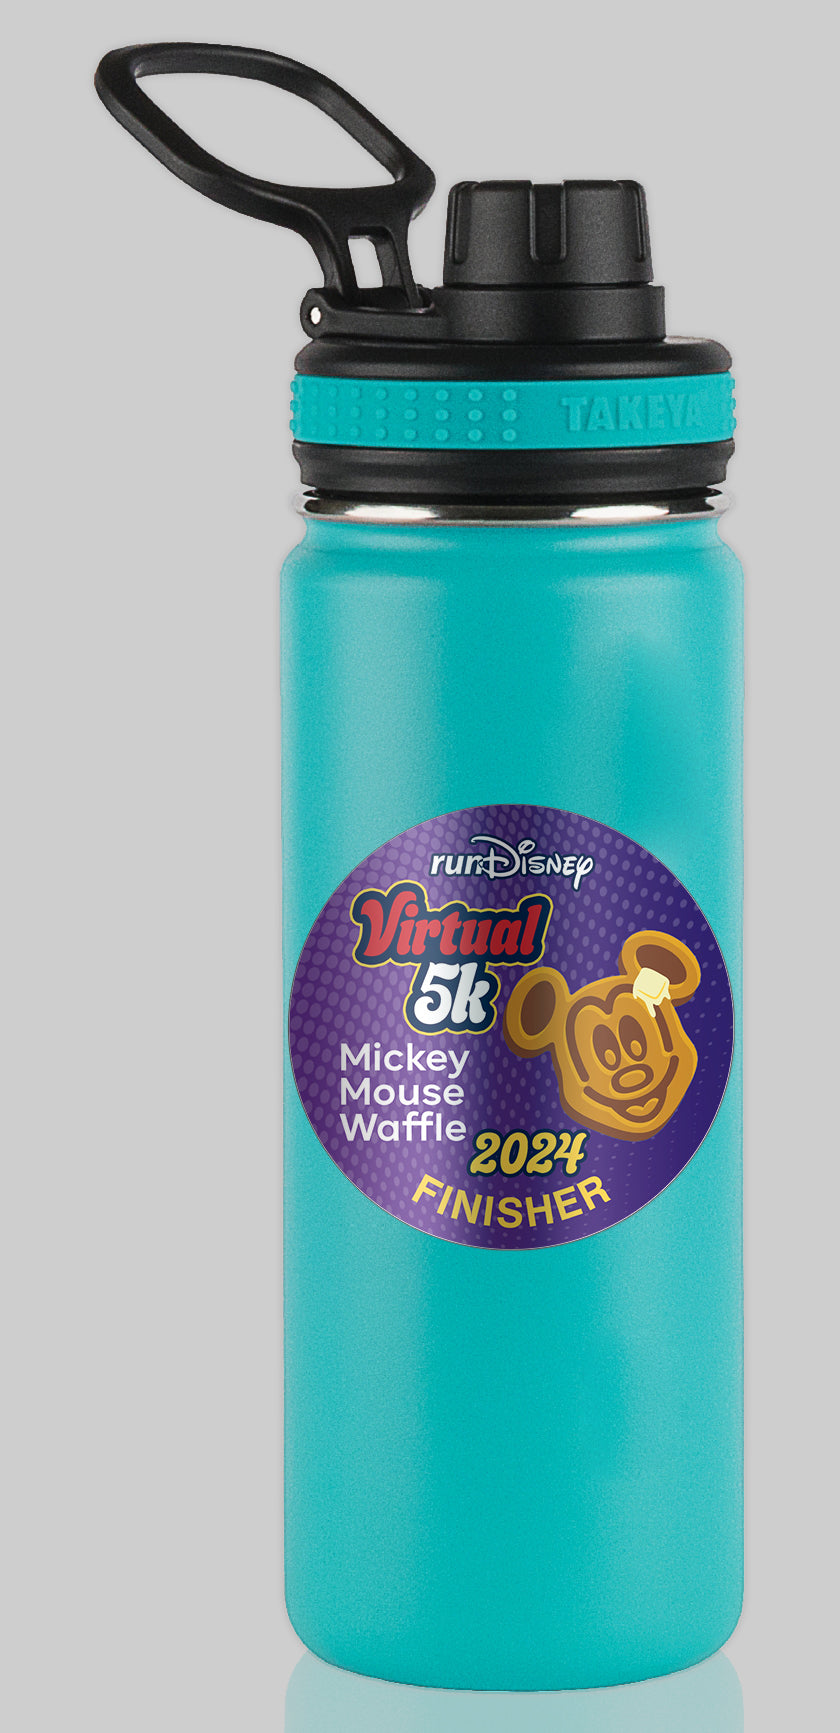 RunDisney Summer Virtual Series 2024 Mickey Mouse Waffle 5K 3.1 Miles FINISHER Water Bottle Mug Sticker